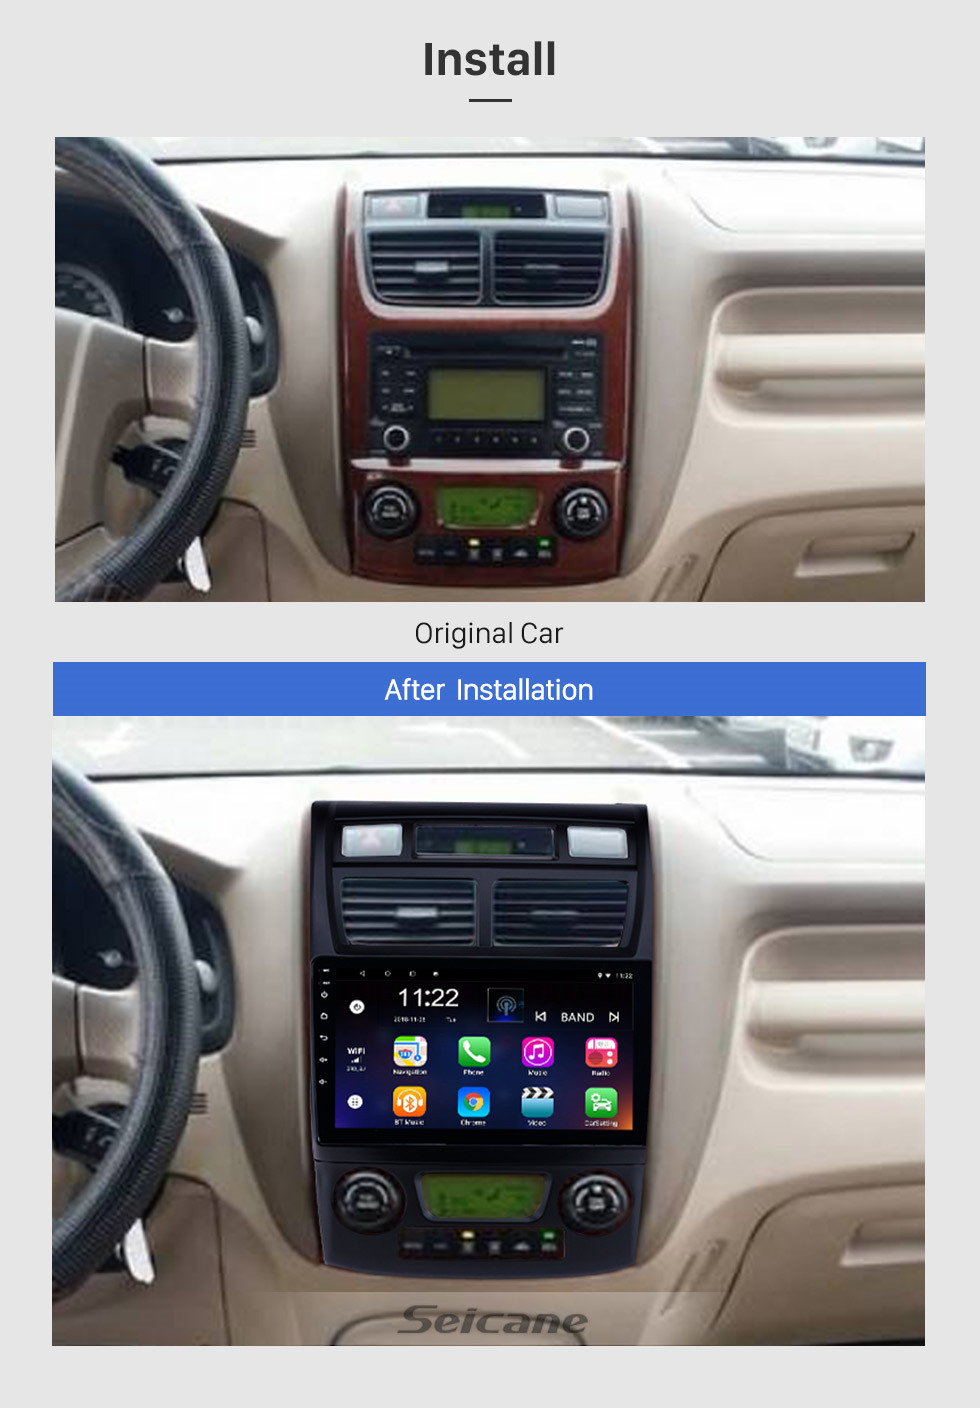 Seicane 2006-2017 KIA Sportage Auto A/C Android 10.0 Bluetooth Radio GPS Navi system auto stereo with WIFI AUX FM USB support DVR Backup Camera TPMS OBD2 